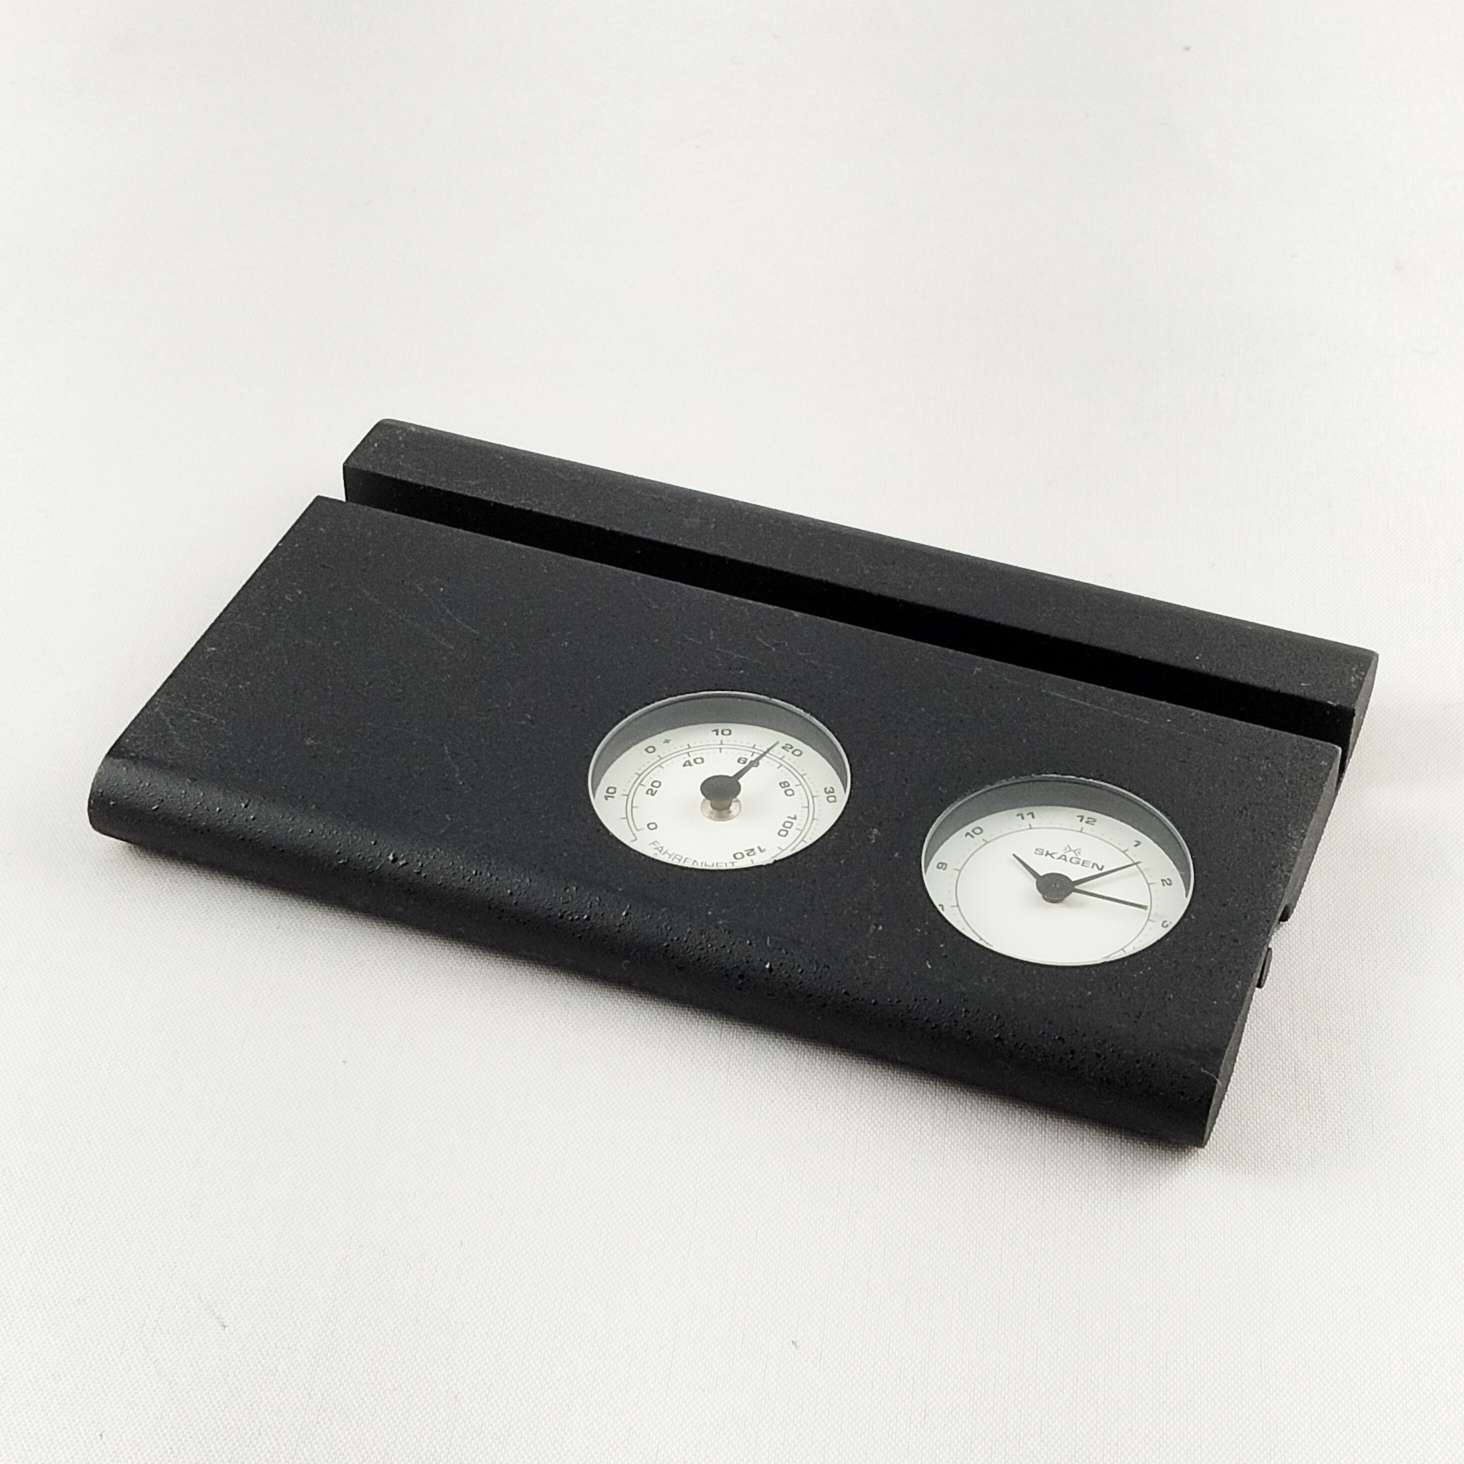 Skagen Desk Clock Business Card Holder with Temperature Dial